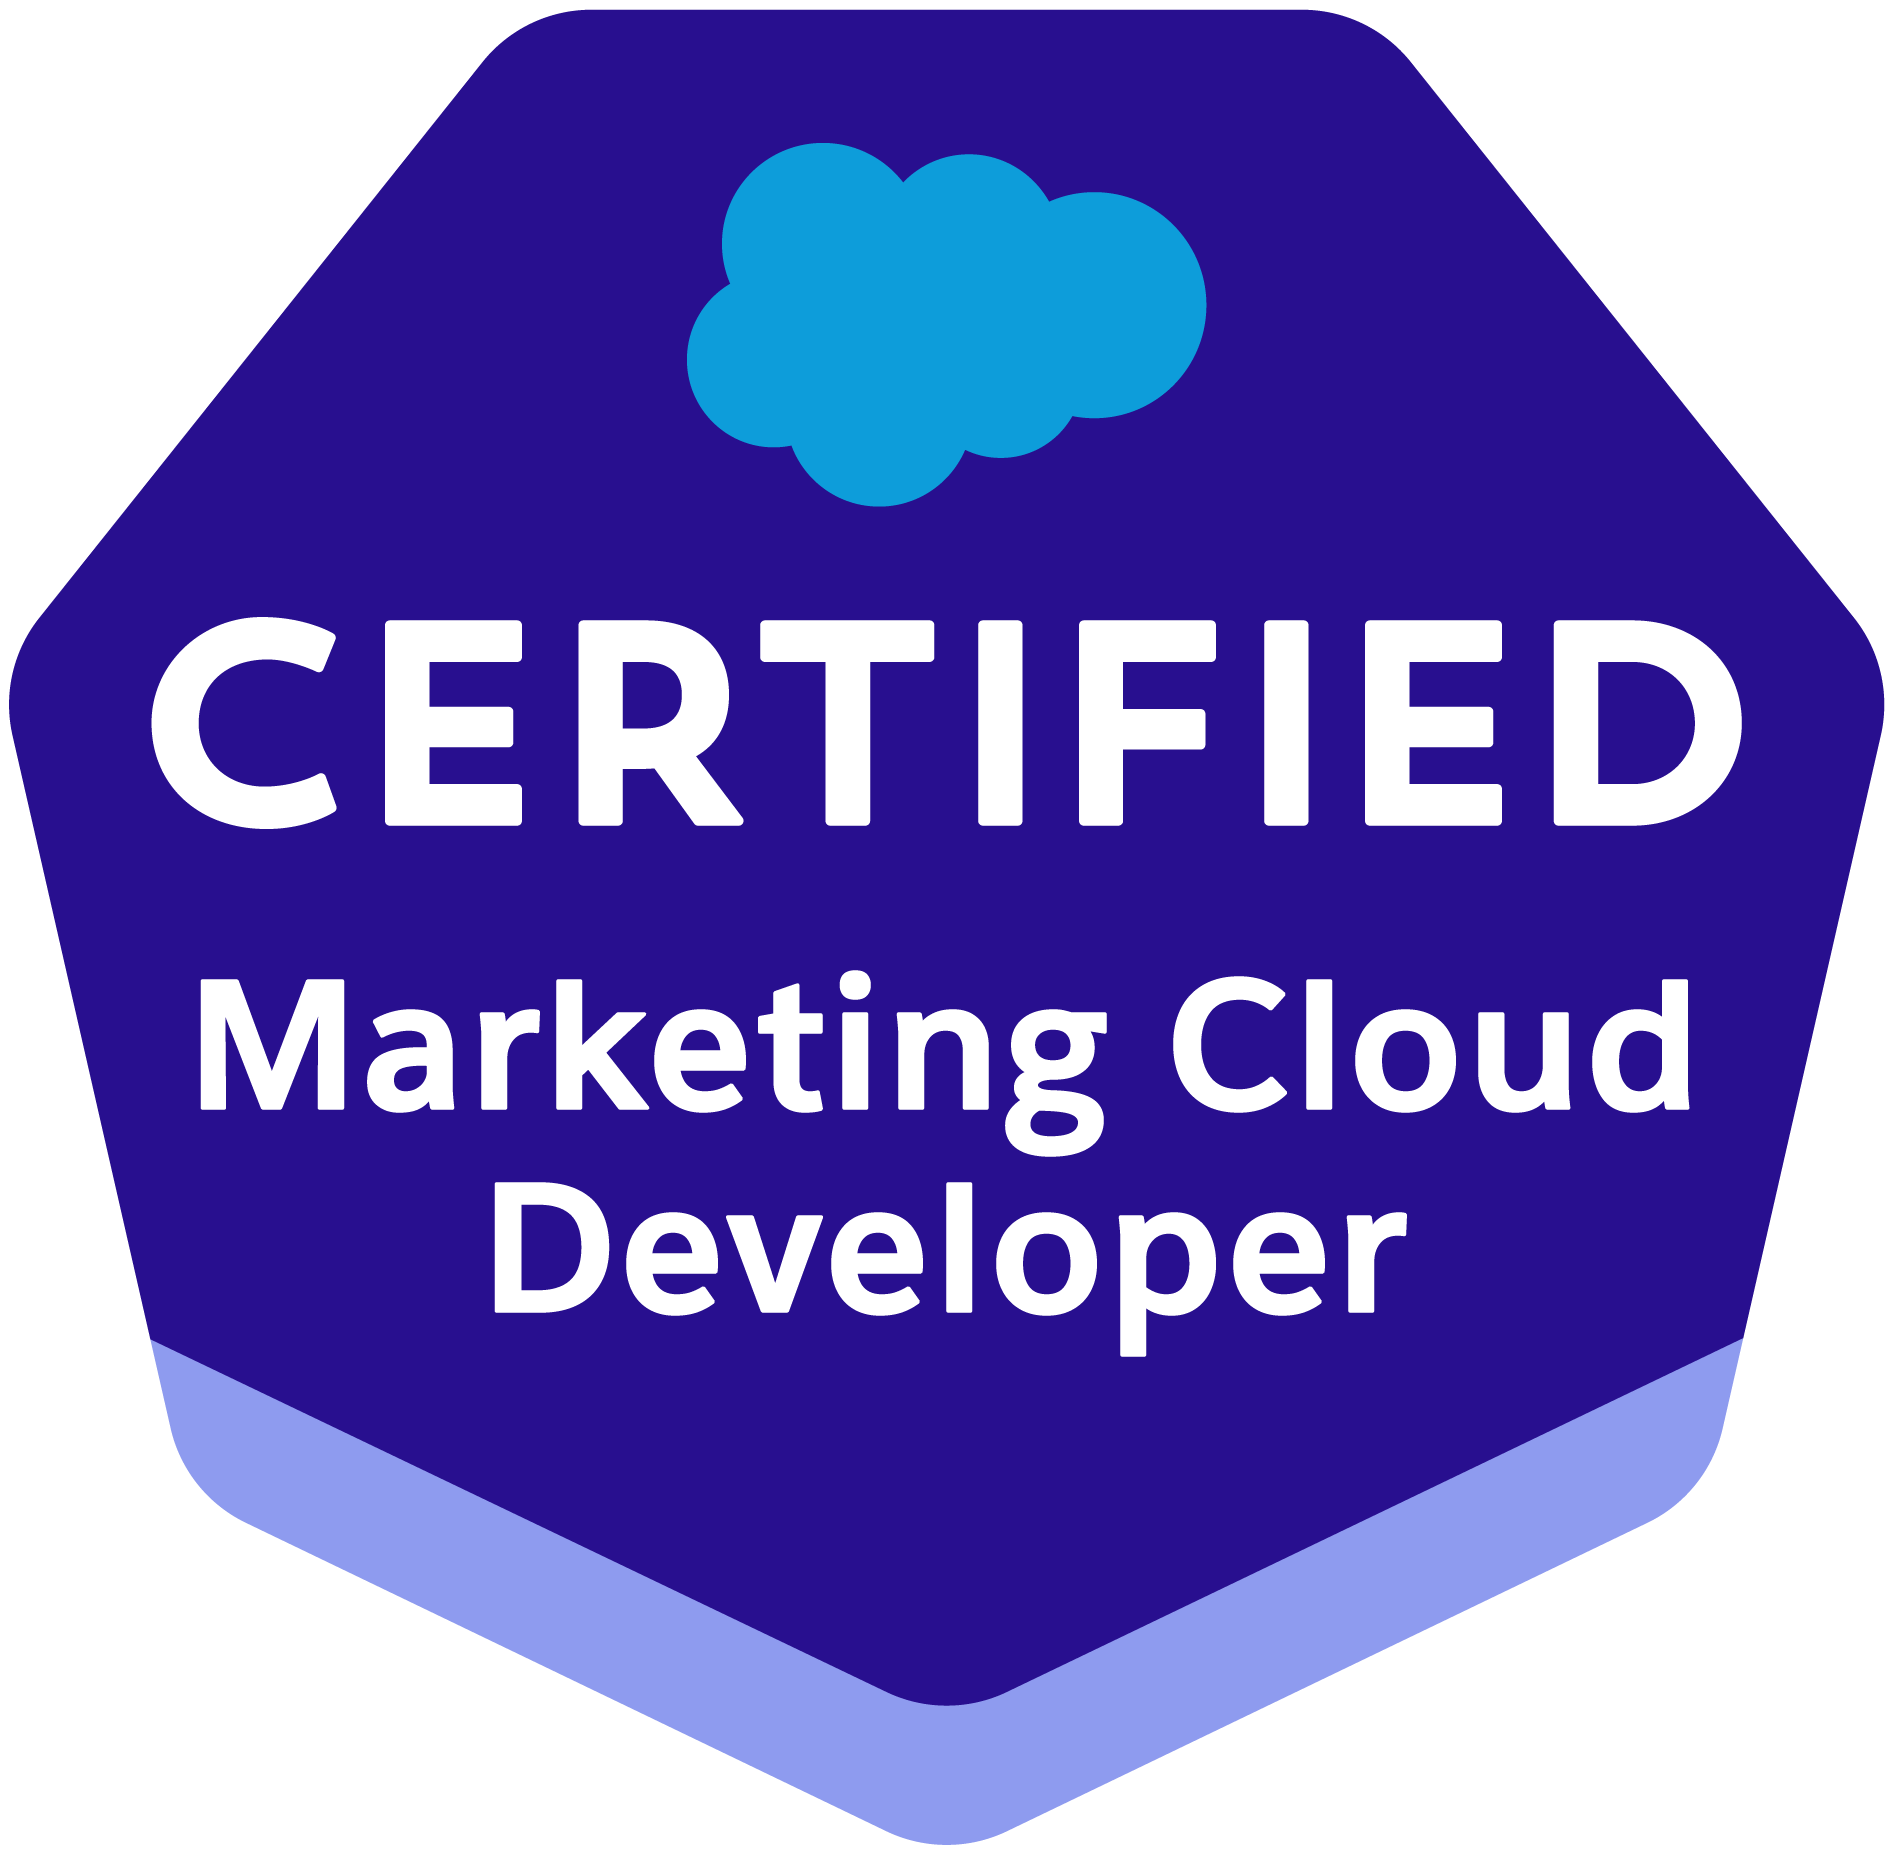 Marketing Cloud Developer certification